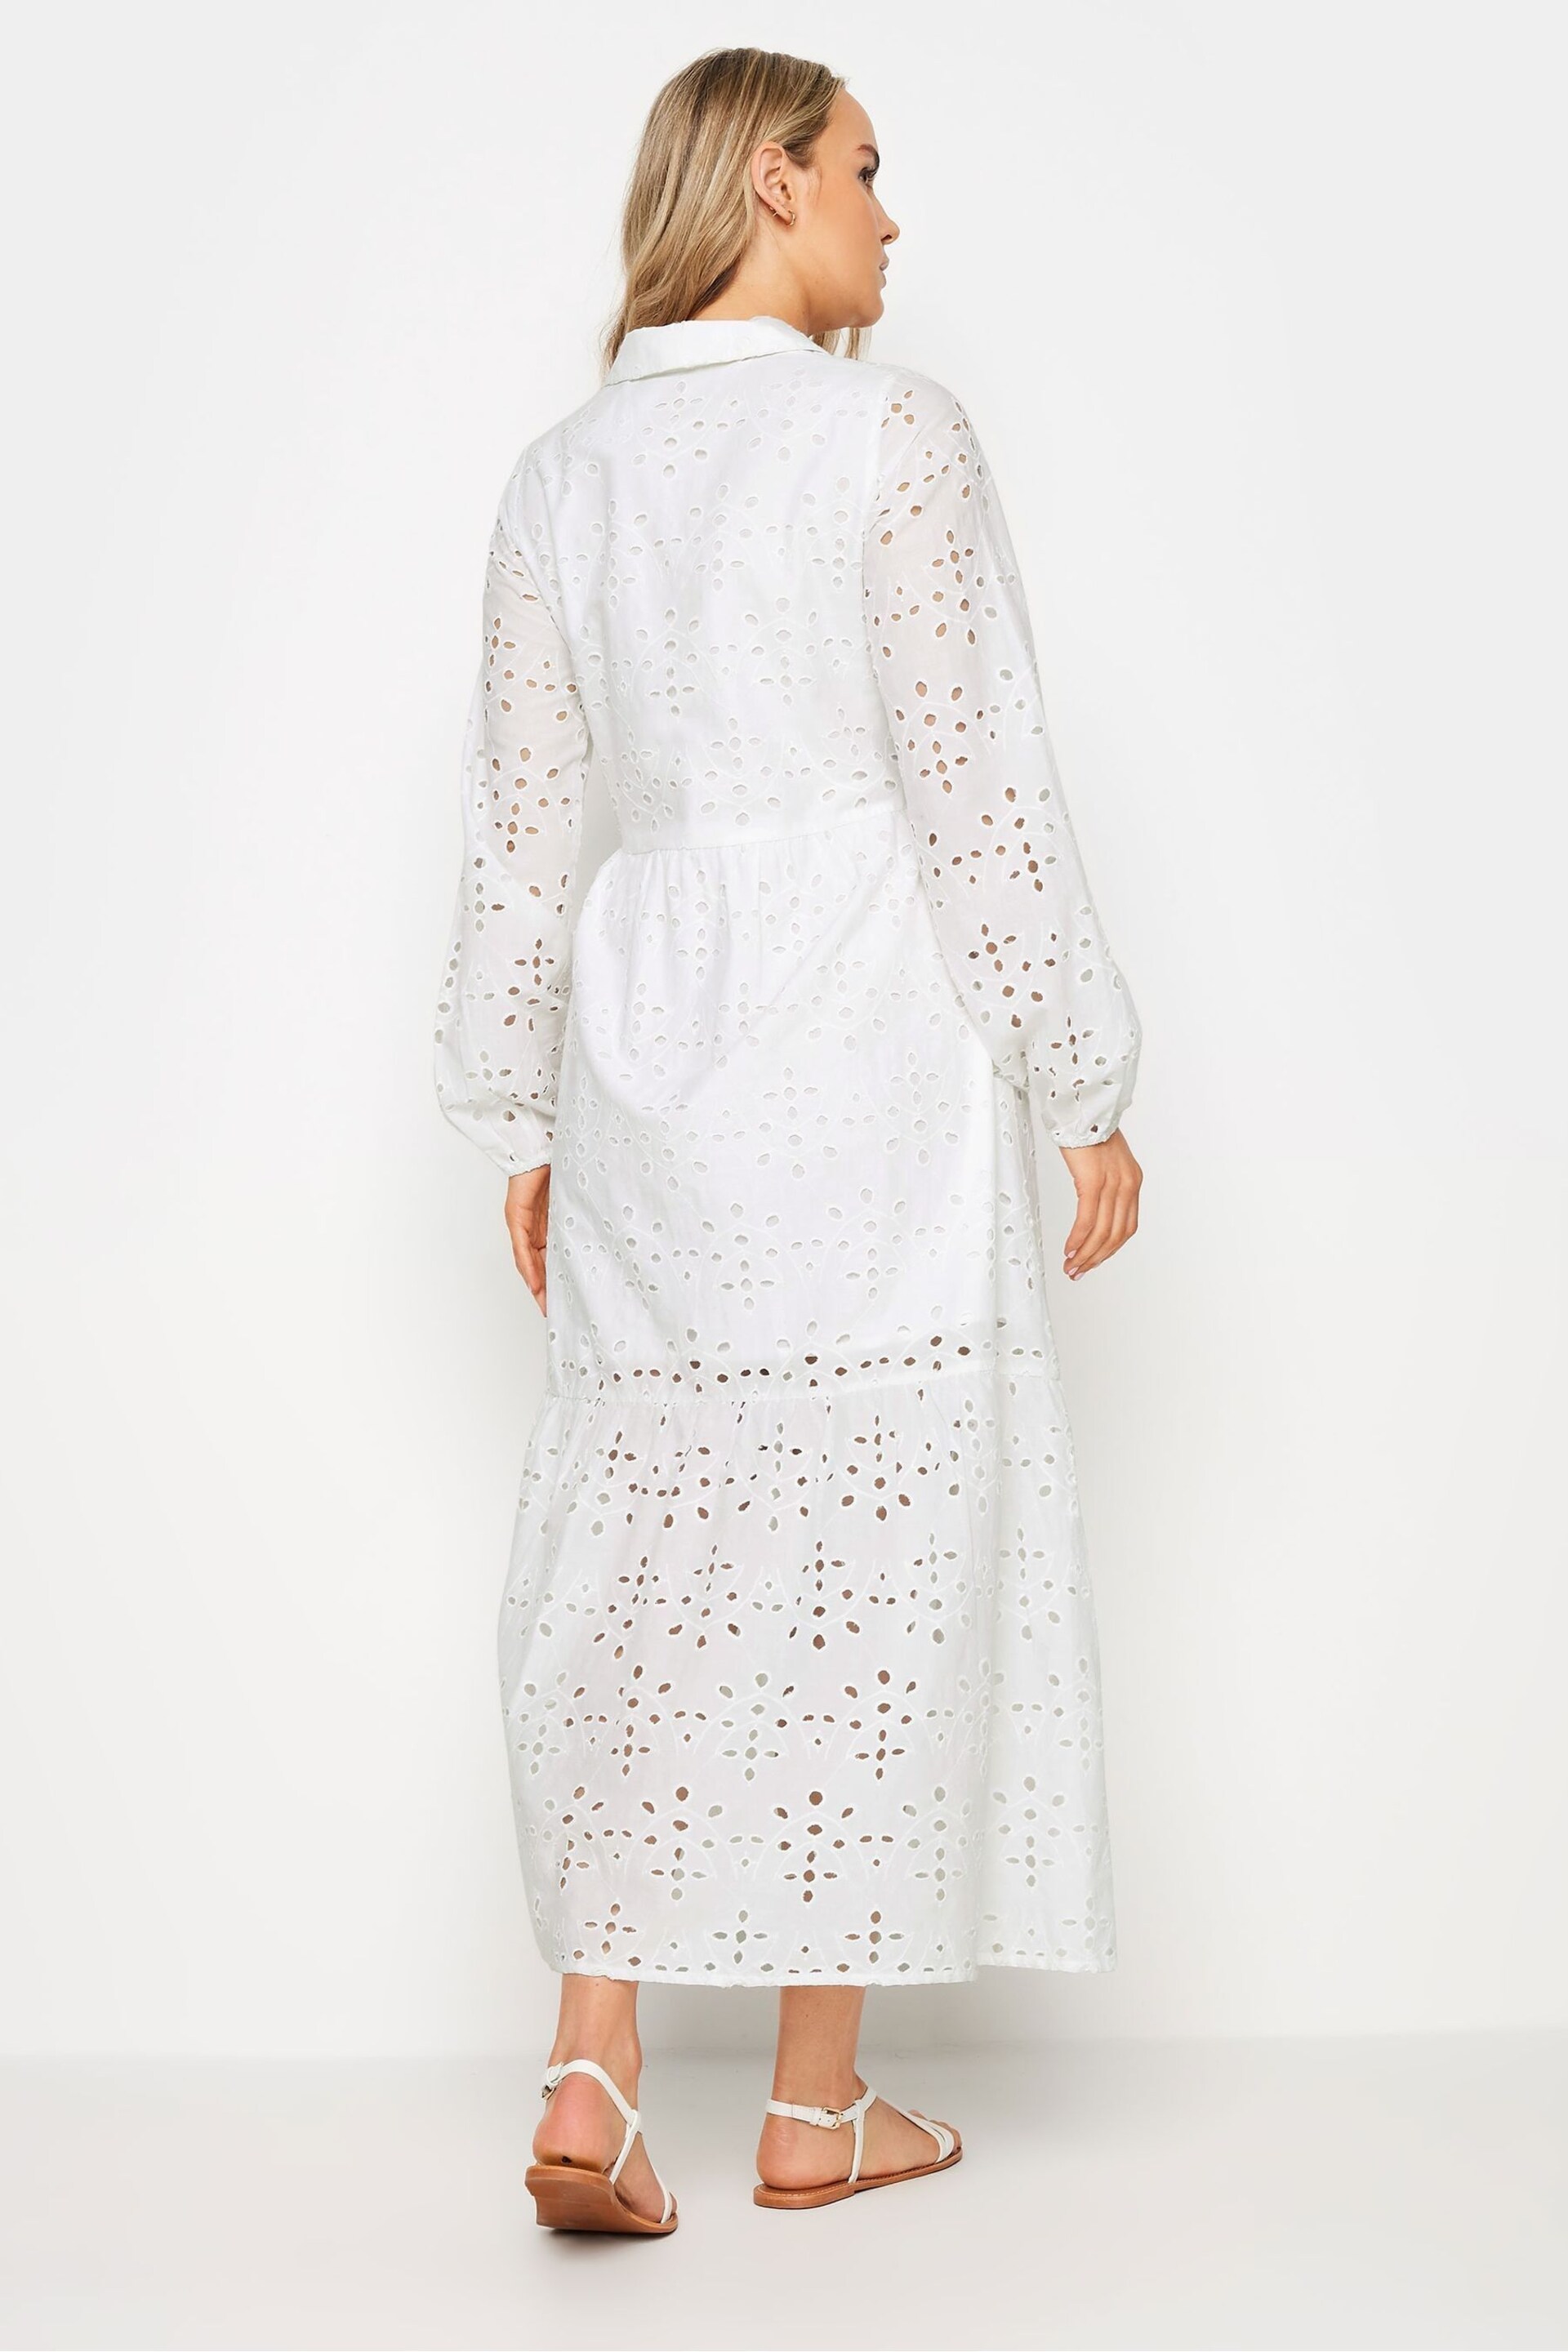 Long Tall Sally White Broidered Long Sleeve Shirt Dress - Image 4 of 6